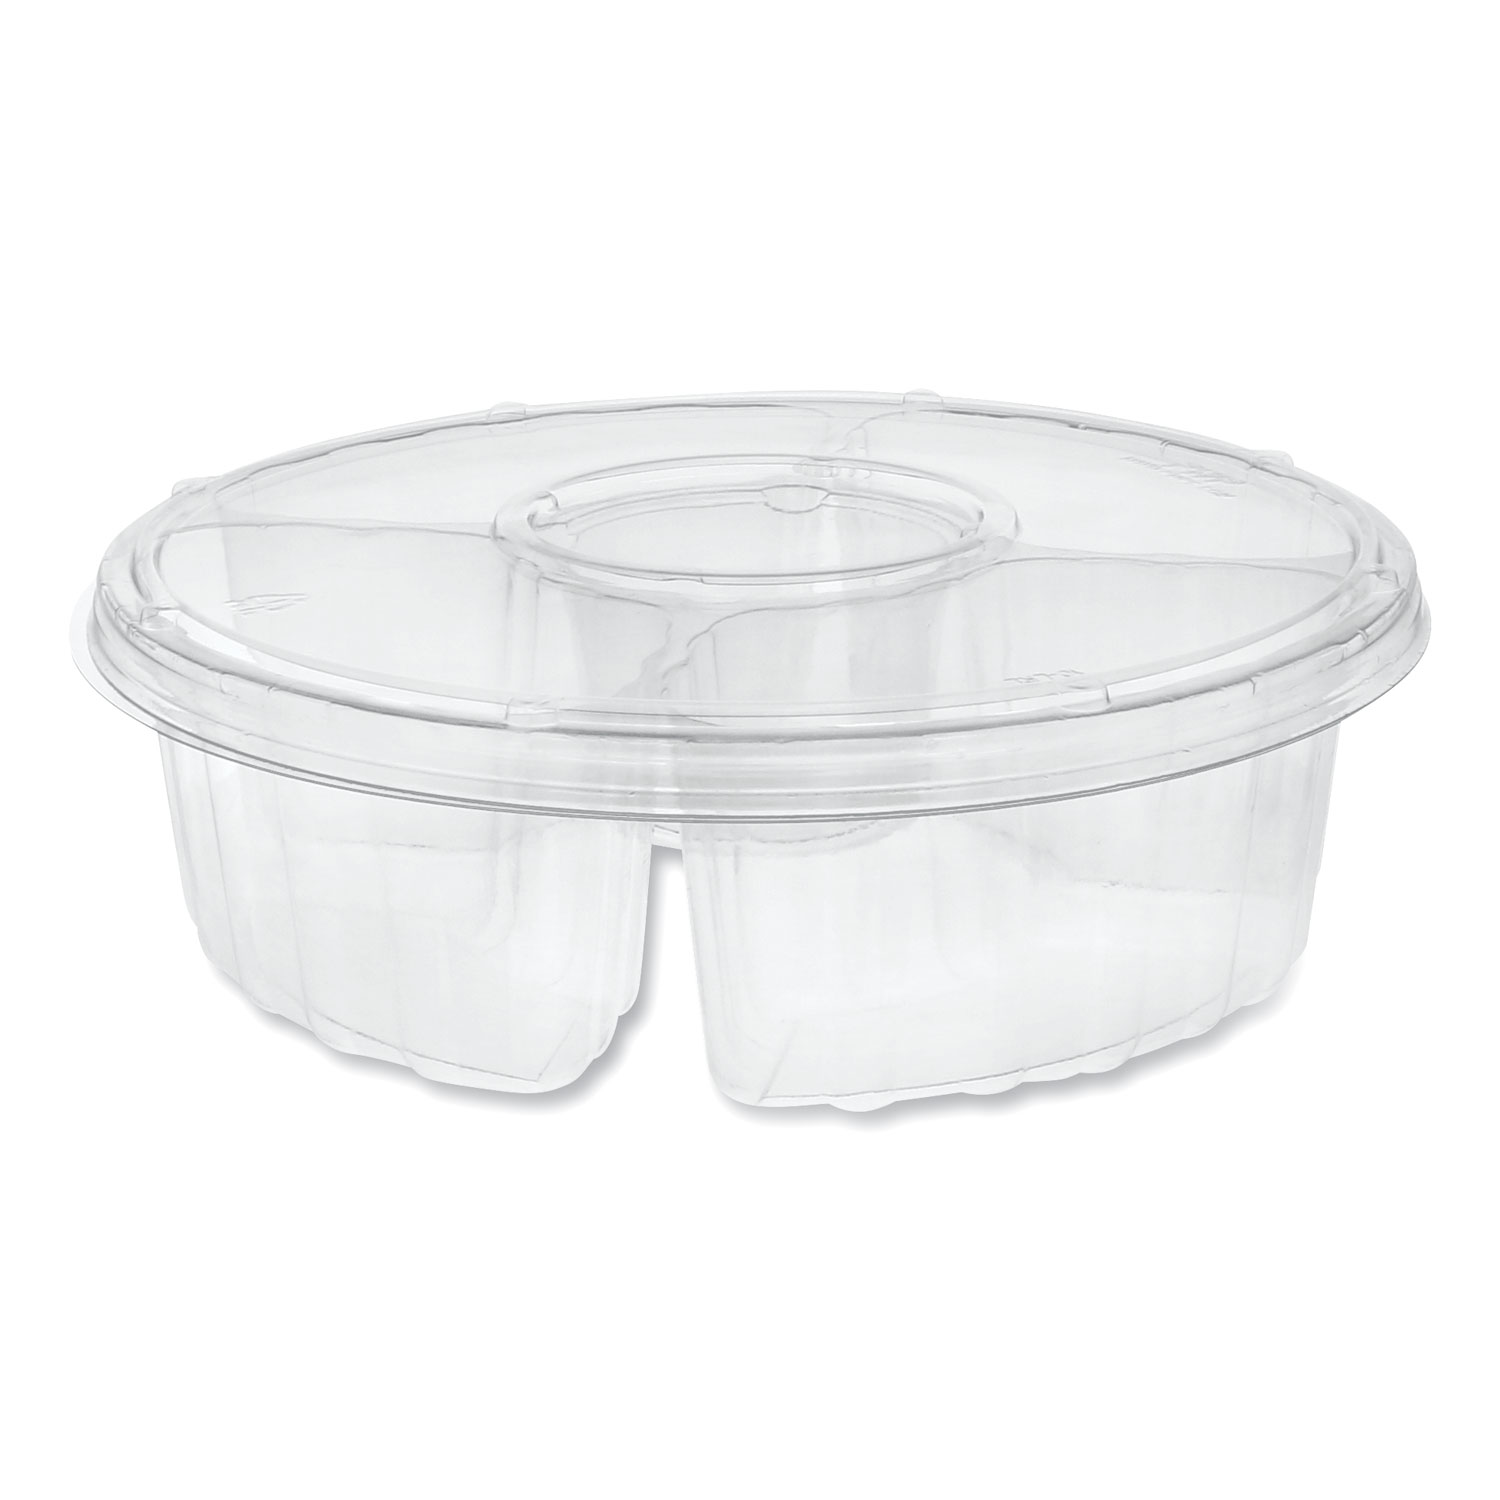 Pactiv Dip Cup Platter, 4-Compartment, 10 dia, 64 oz, Clear, 100/Carton